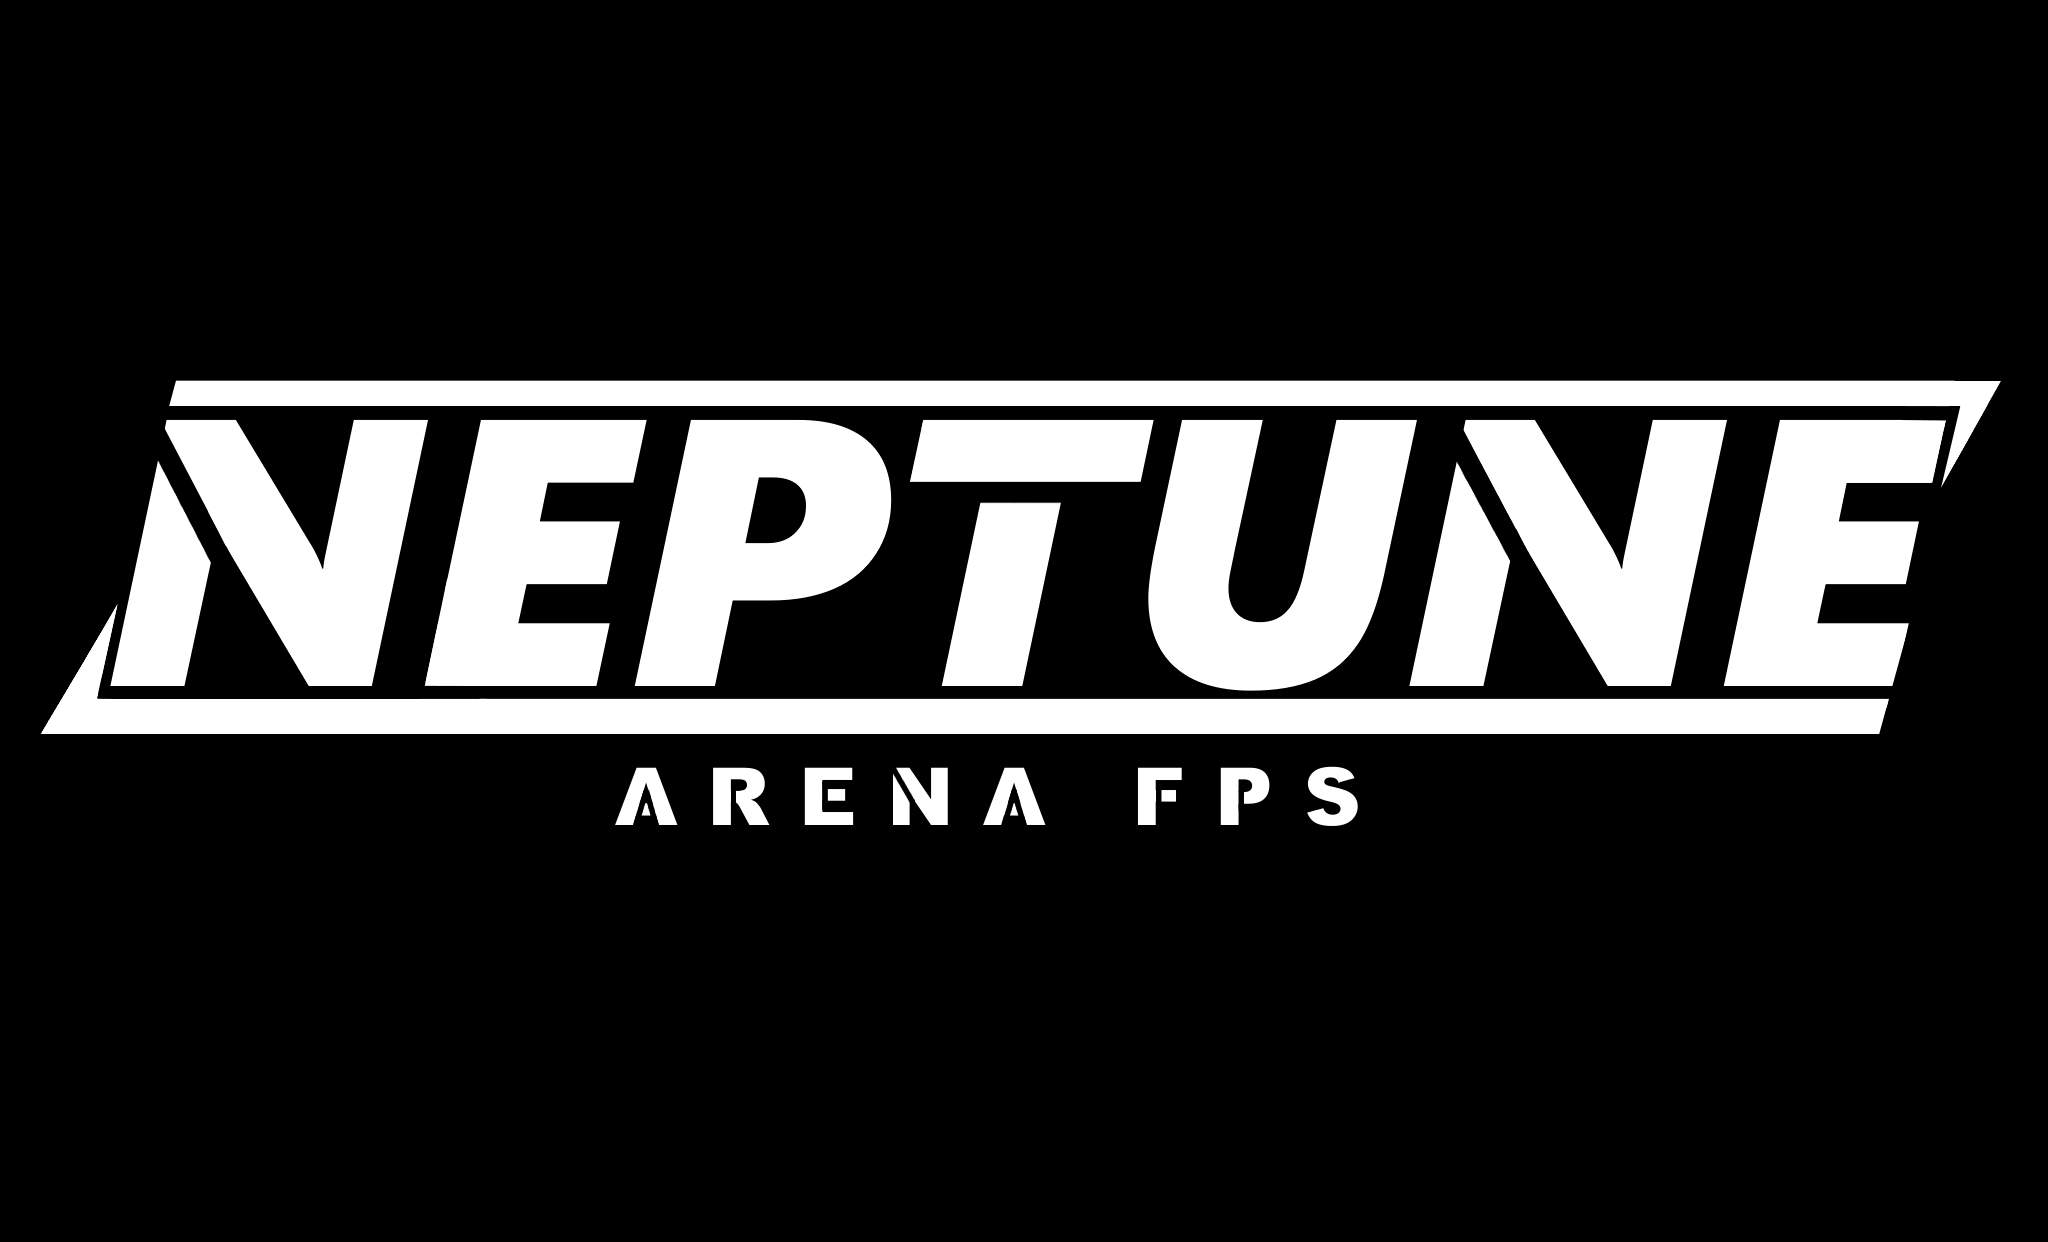 Bote de Neptune : Arena FPS